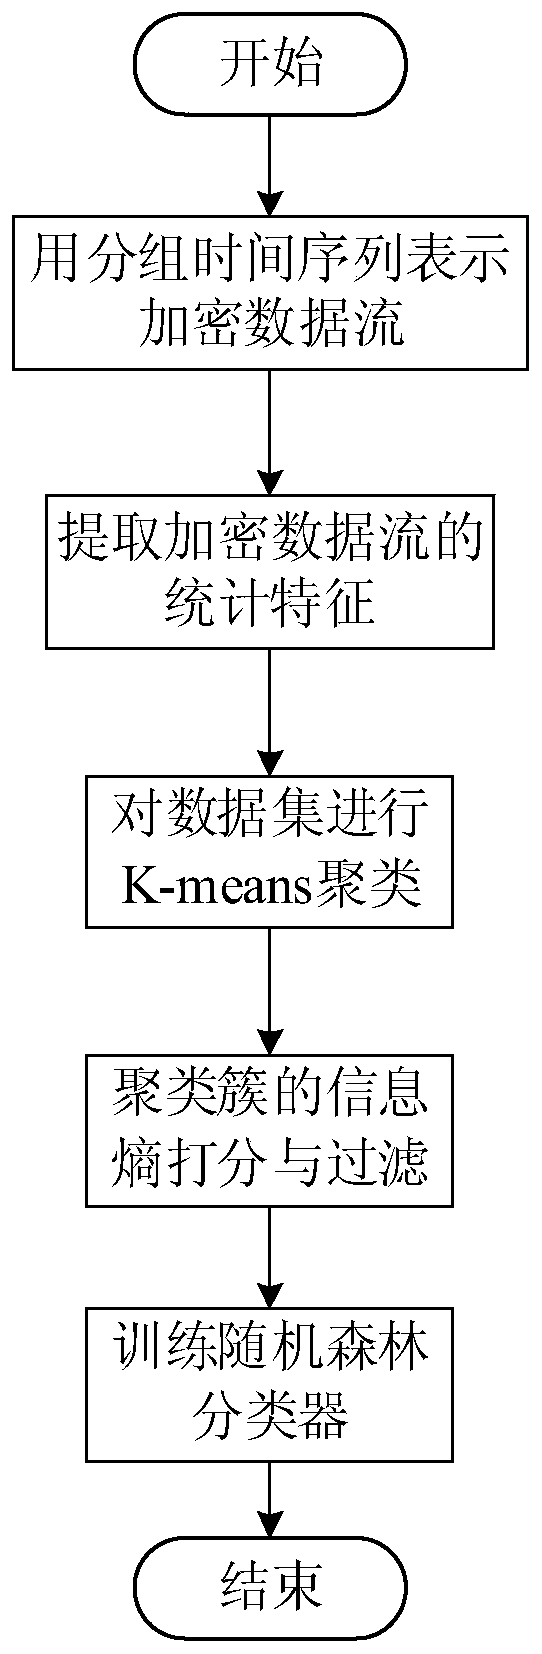 A mobile application program identification method based on K-means clustering and a random forest algorithm